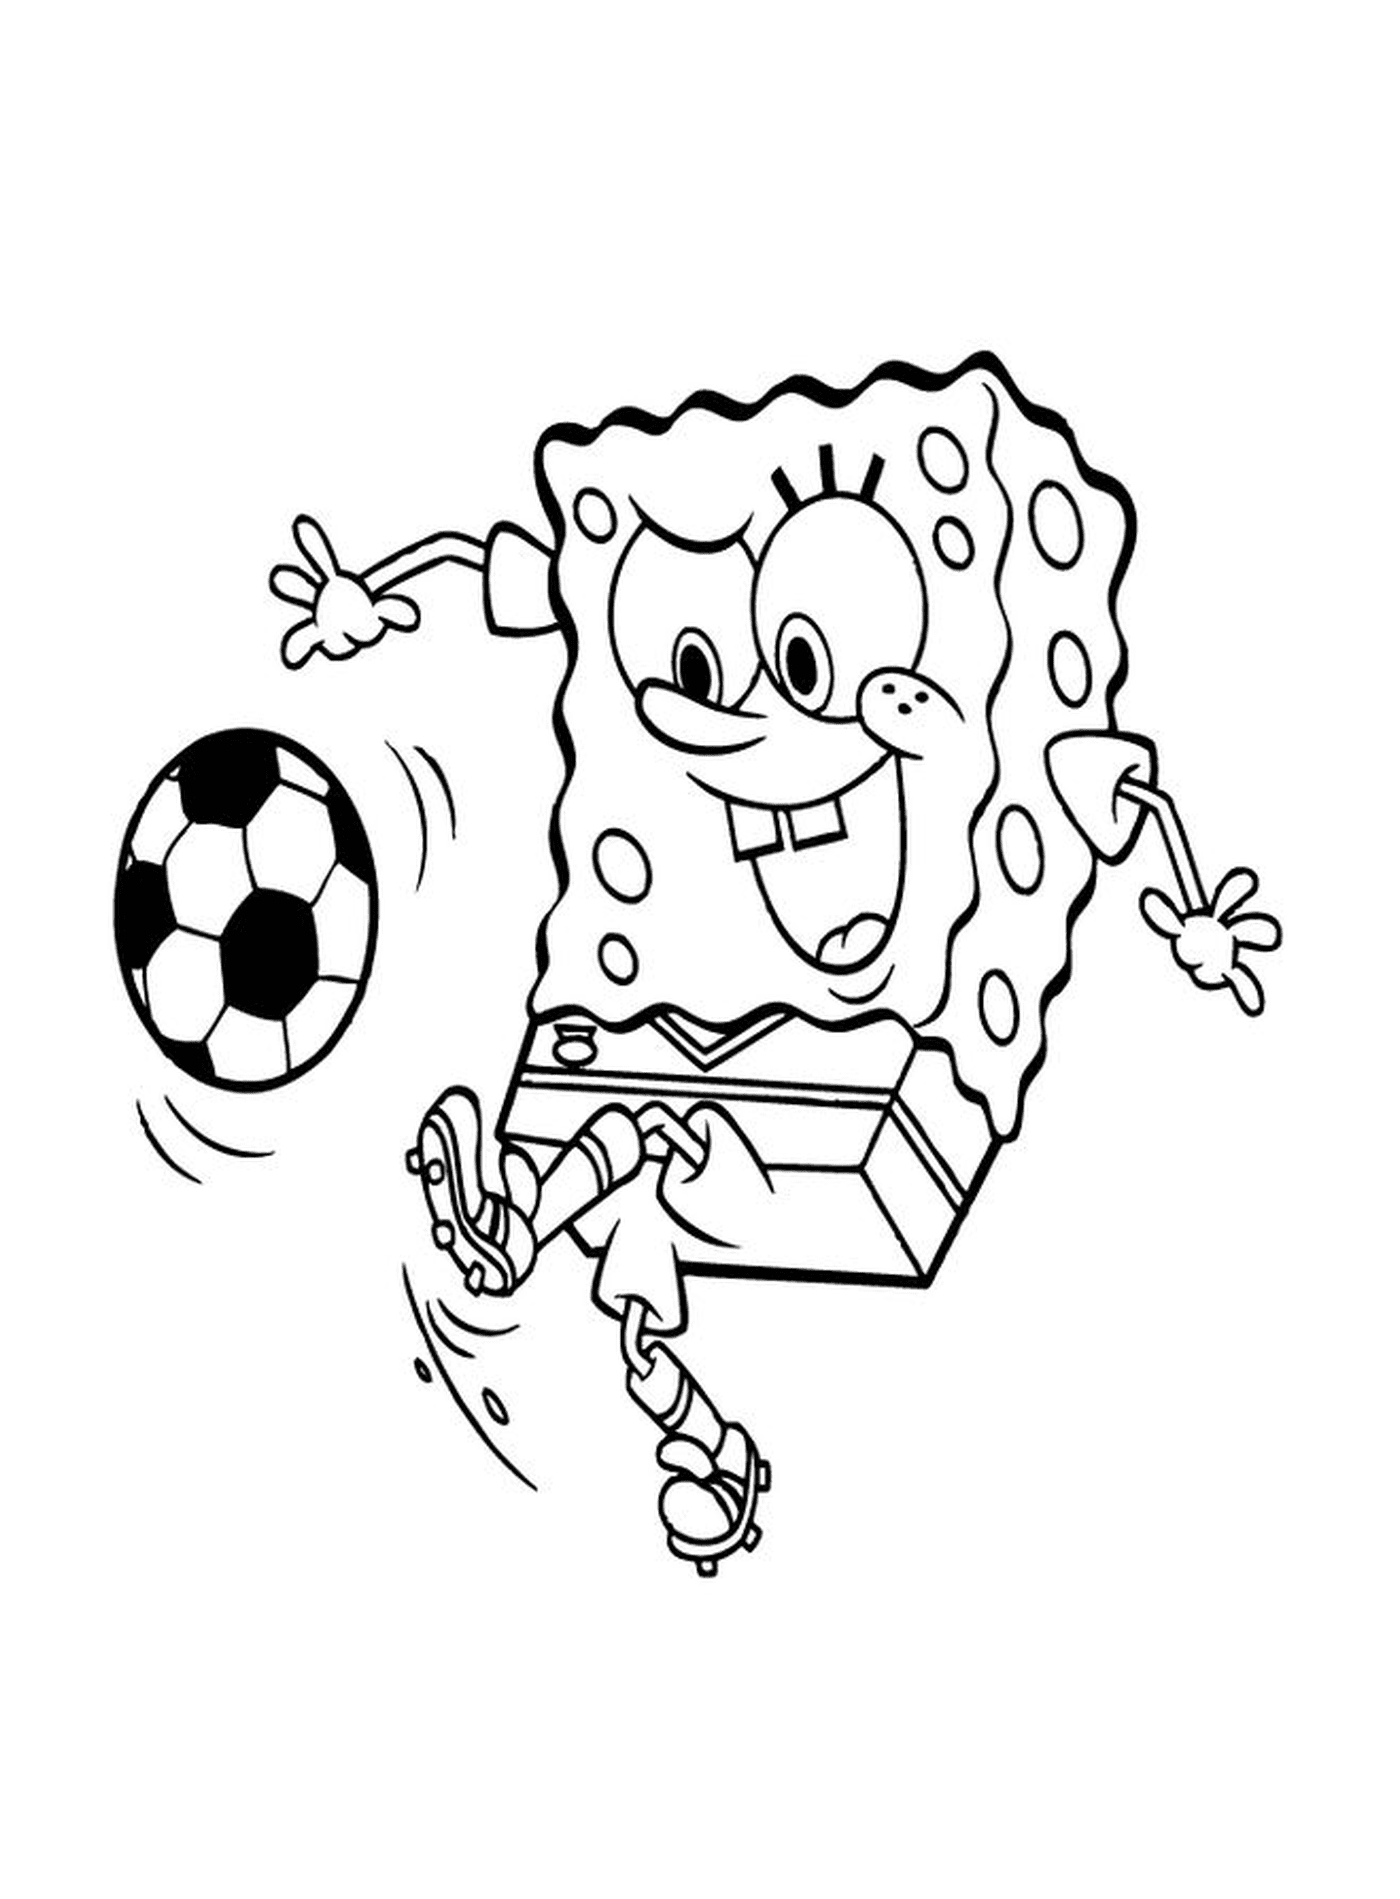  Spongebob spielt Fußball 